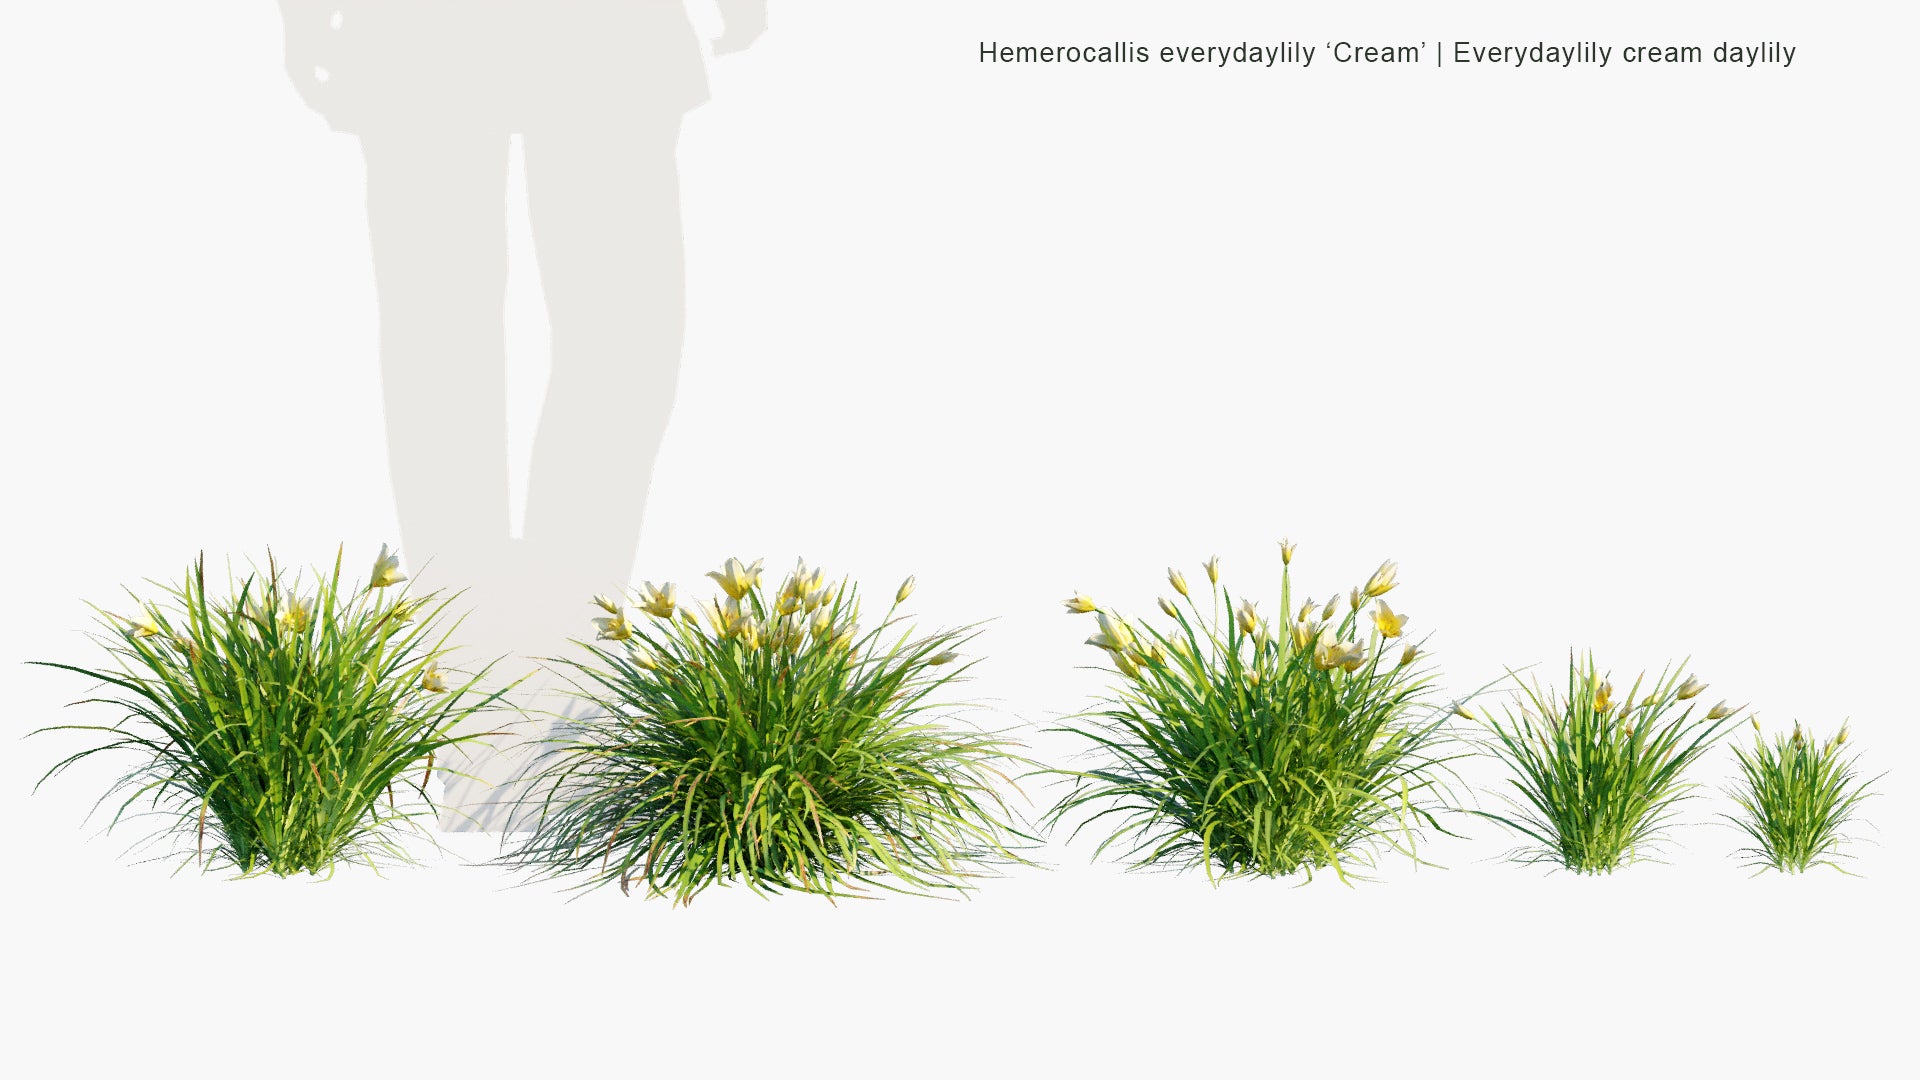 Low Poly Hemerocallis Everydaylily 'Cream' - Everydaylily Cream Daylily (3D Model)